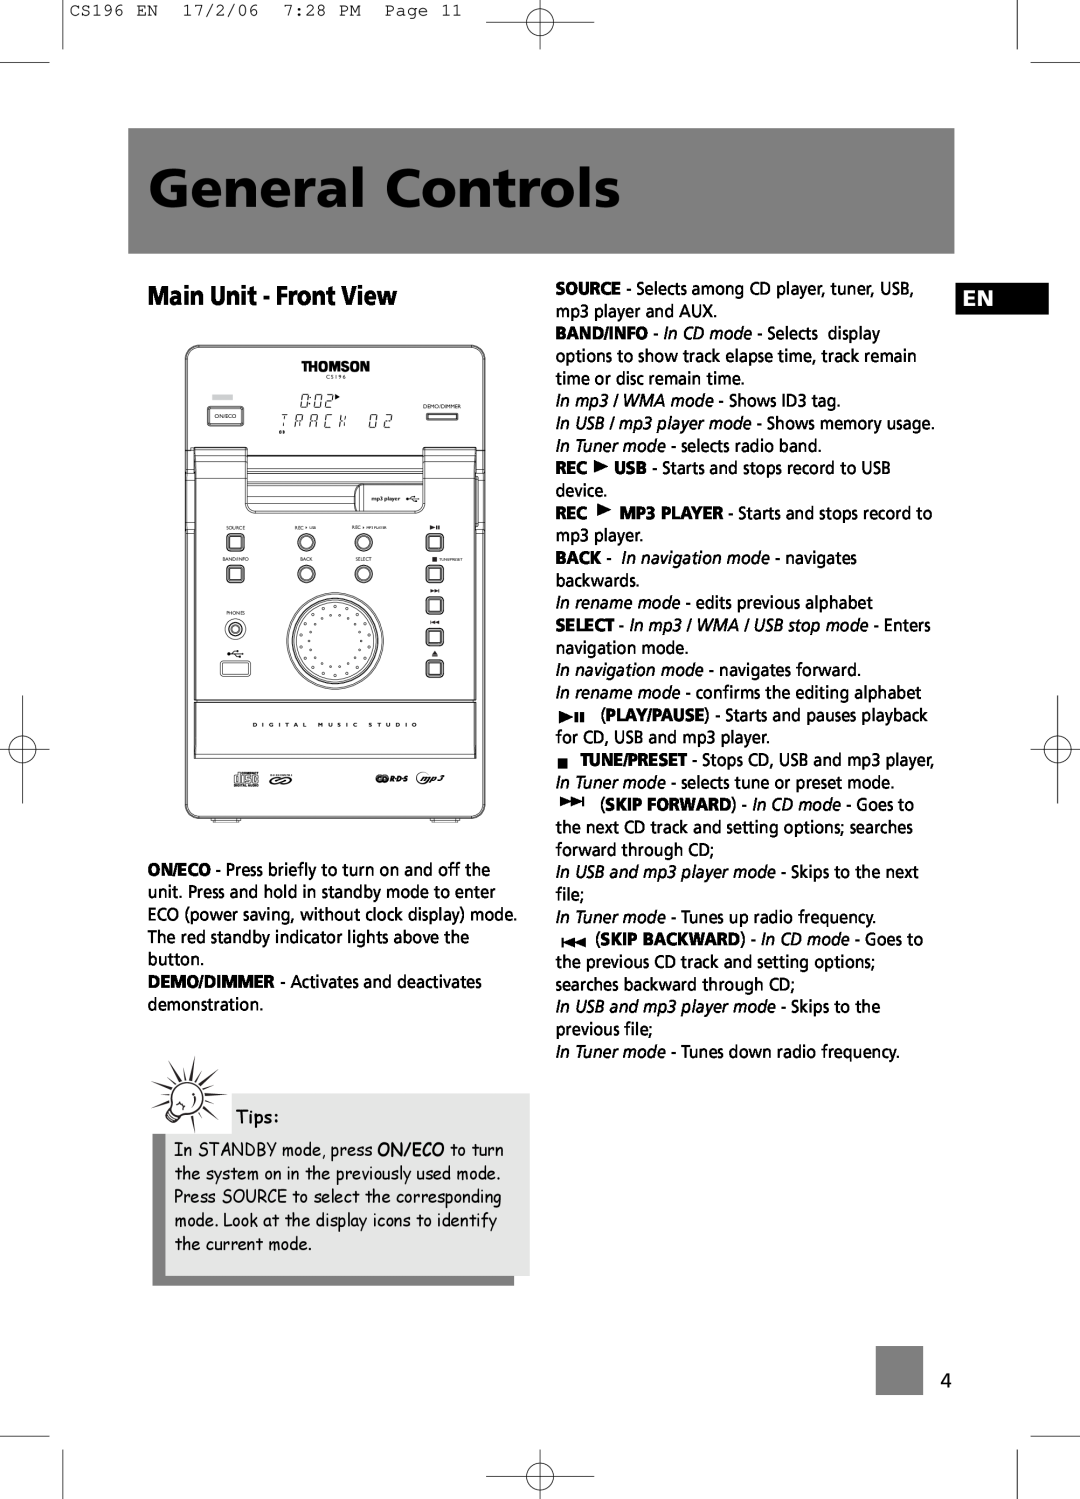 Technicolor - Thomson CS196 user manual General Controls, Main Unit - Front View, Tips 